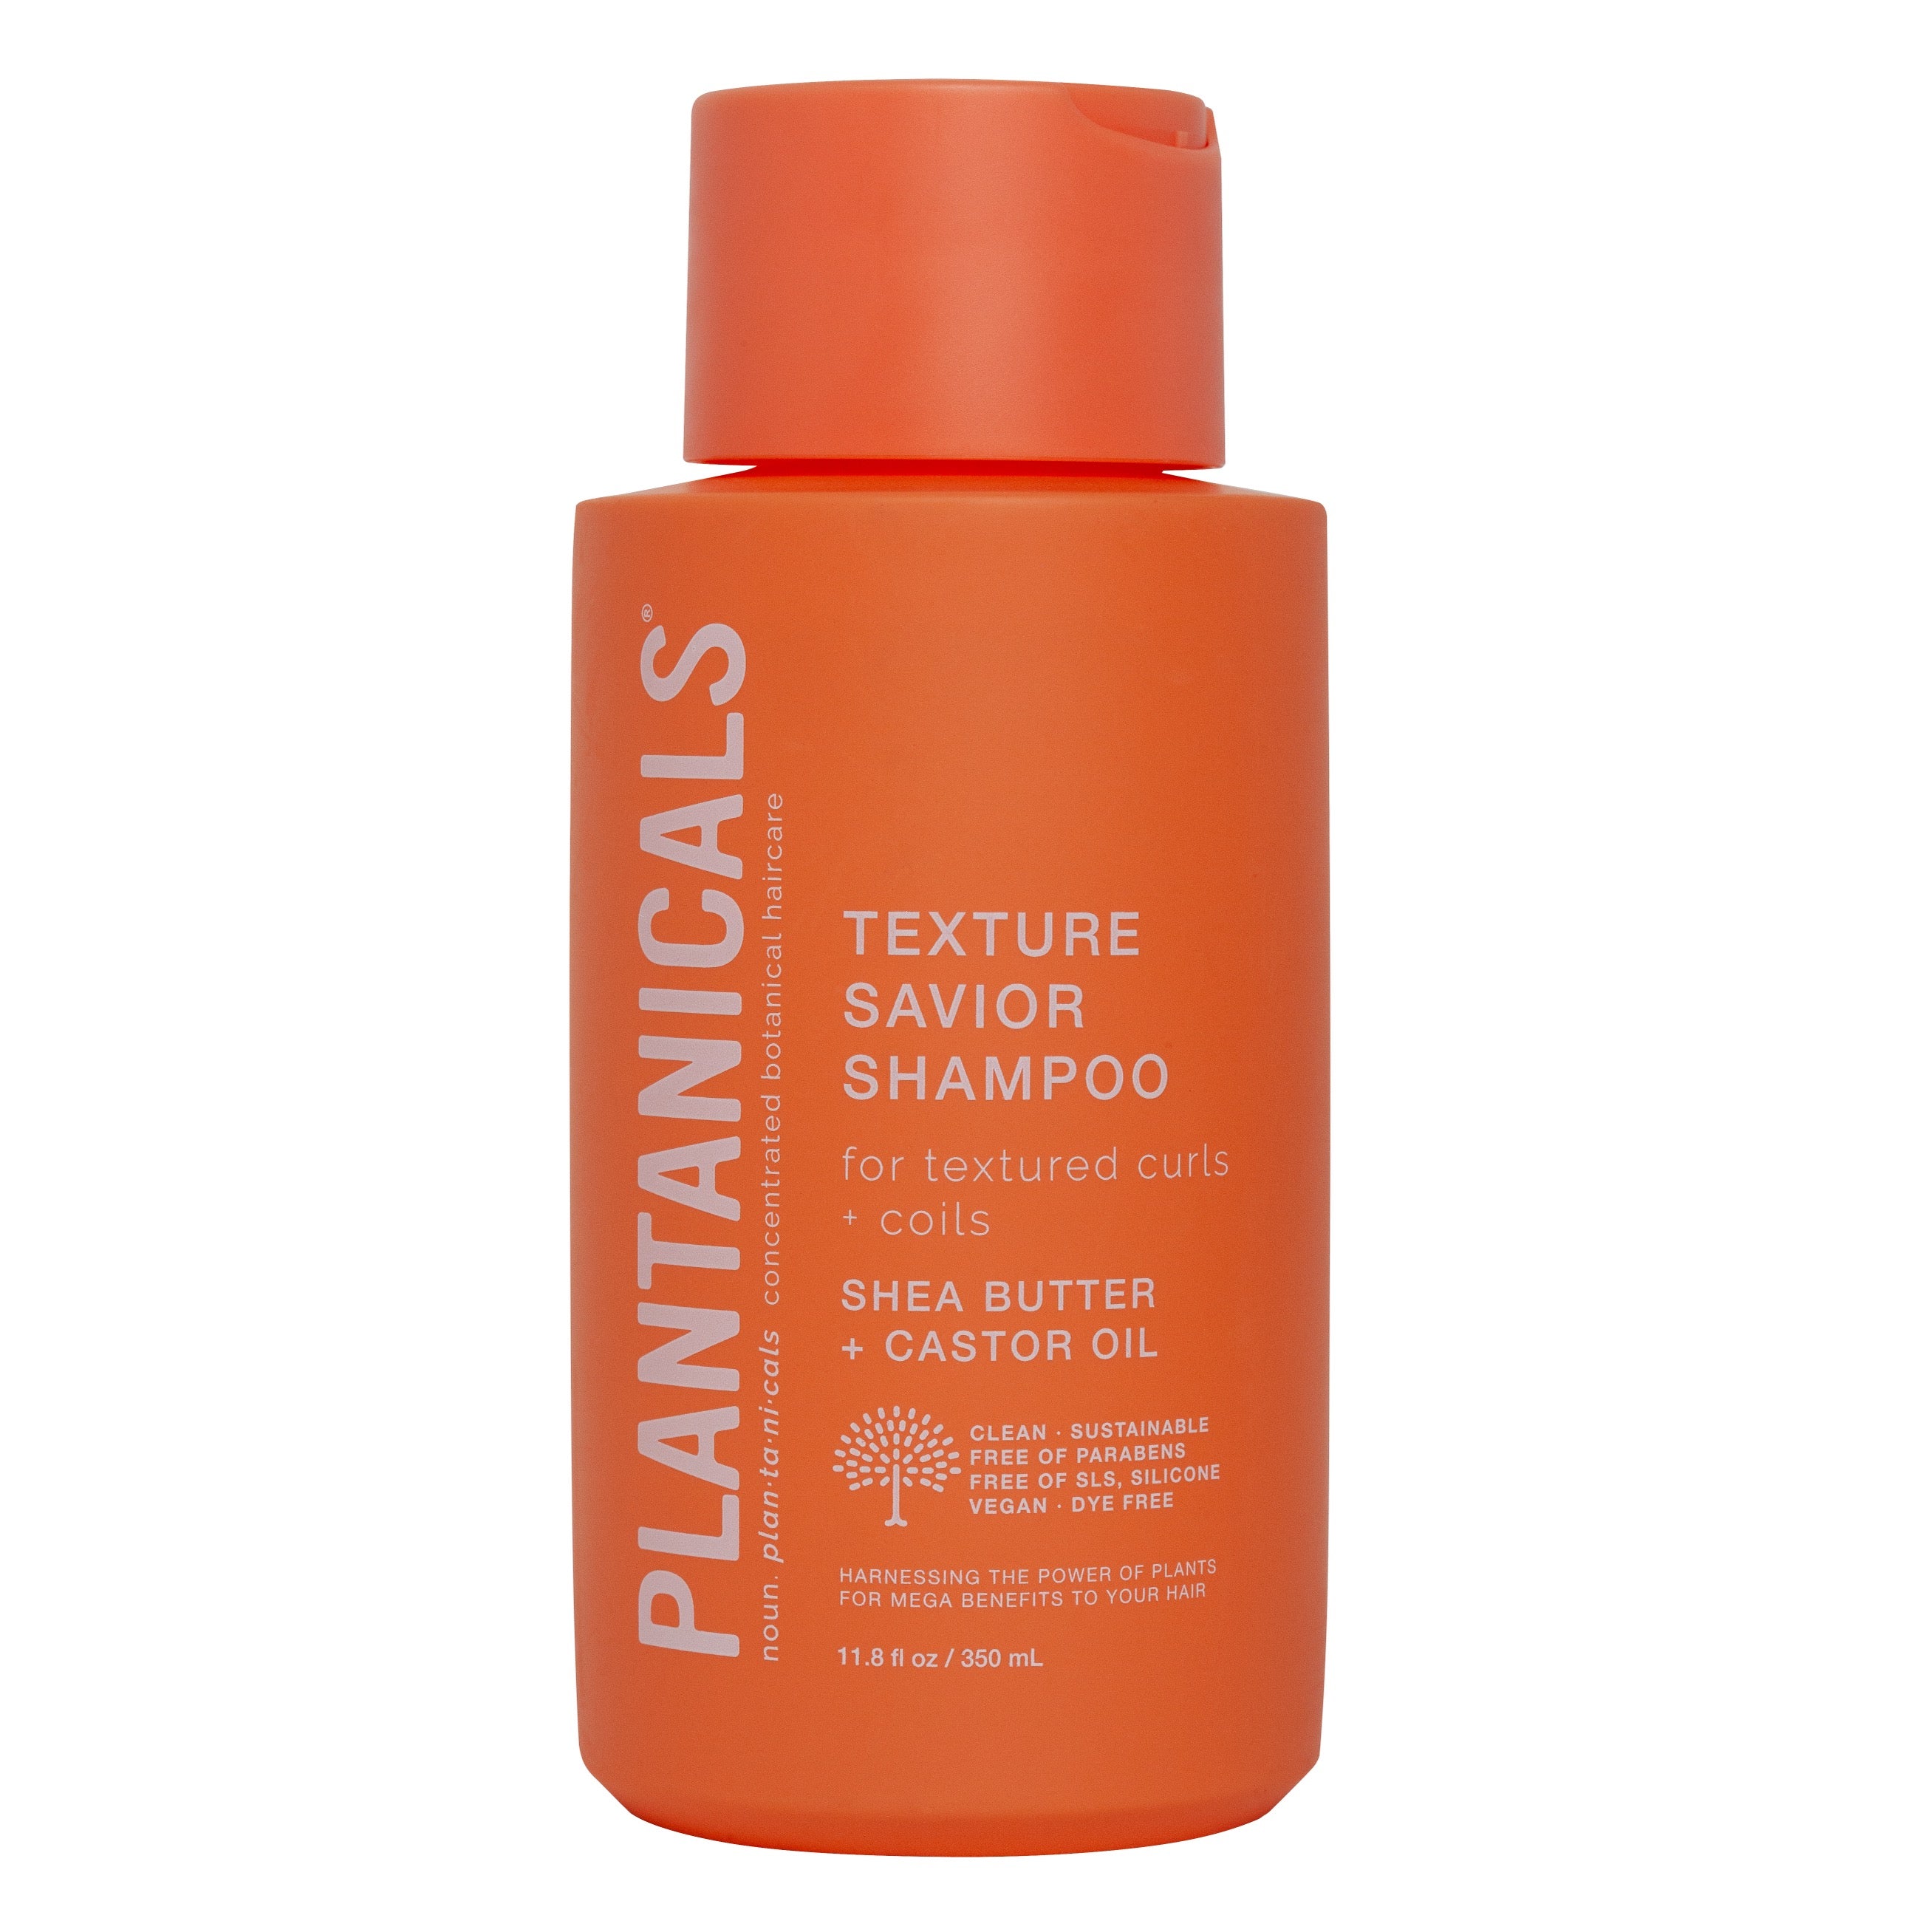 Texture Savior Shampoo